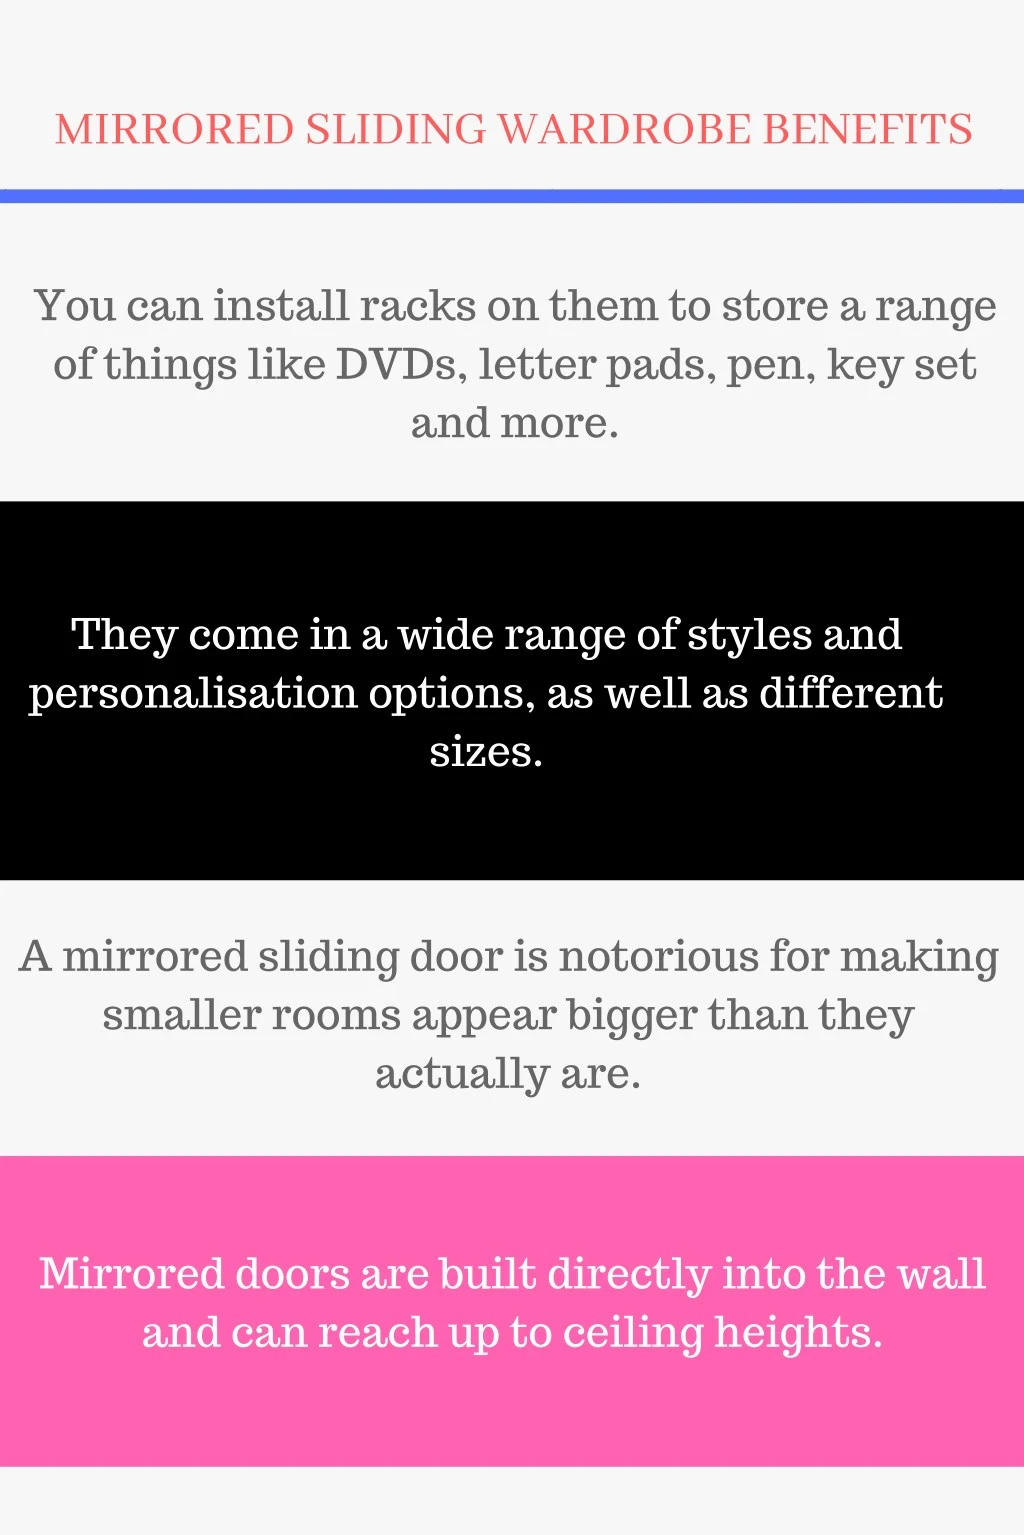 mirrored sliding wardrobe benefits